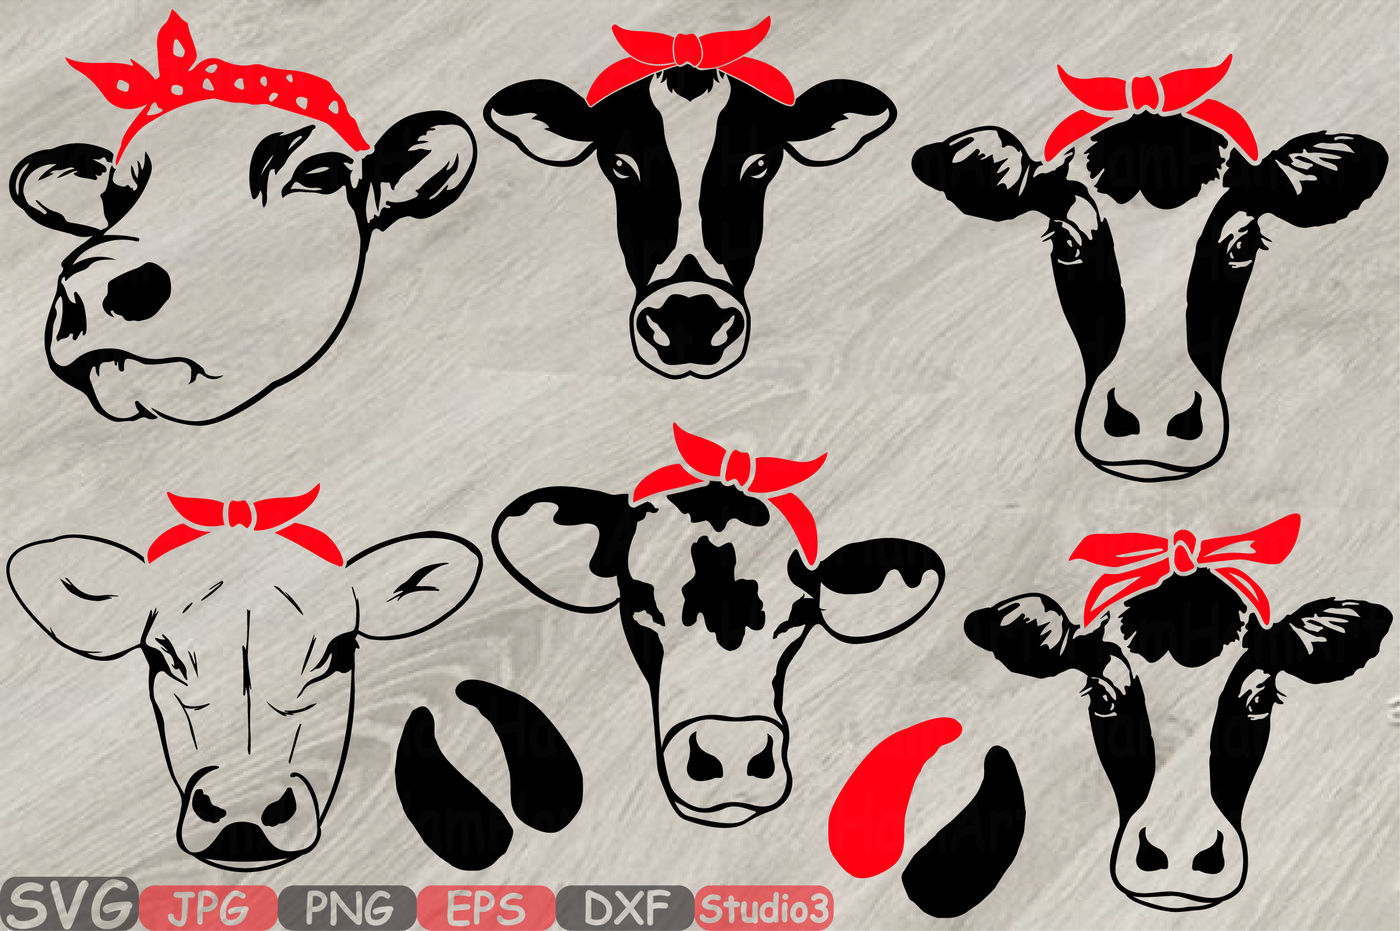 Cow Head Whit Bandana Silhouette Svg Cowboy Cattle Farm Milk 779s By Hamhamart Thehungryjpeg Com